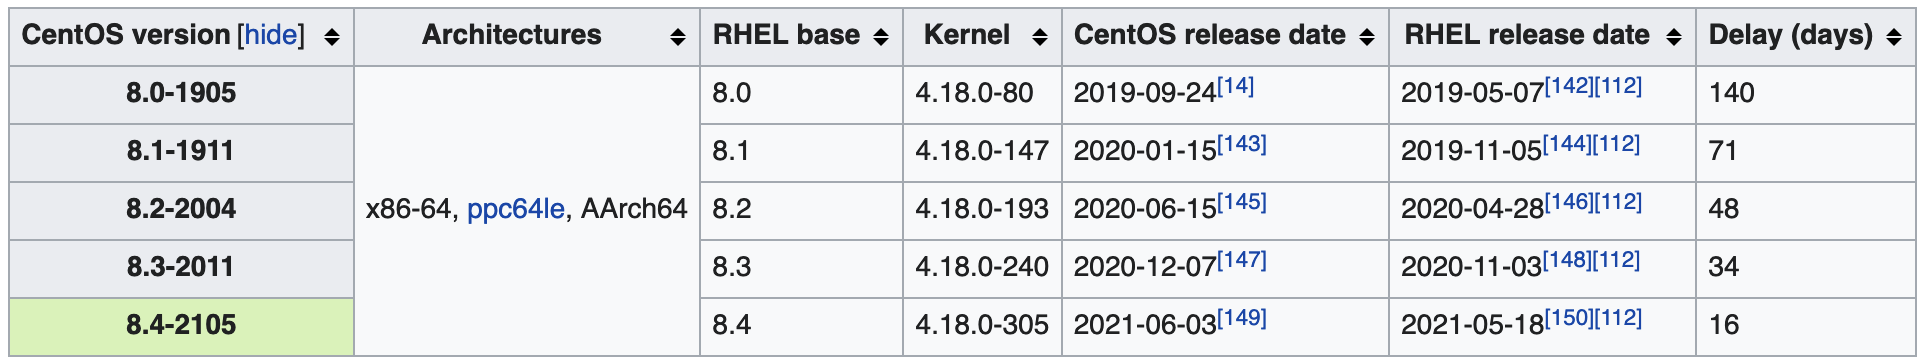 CentOS 8 release dates